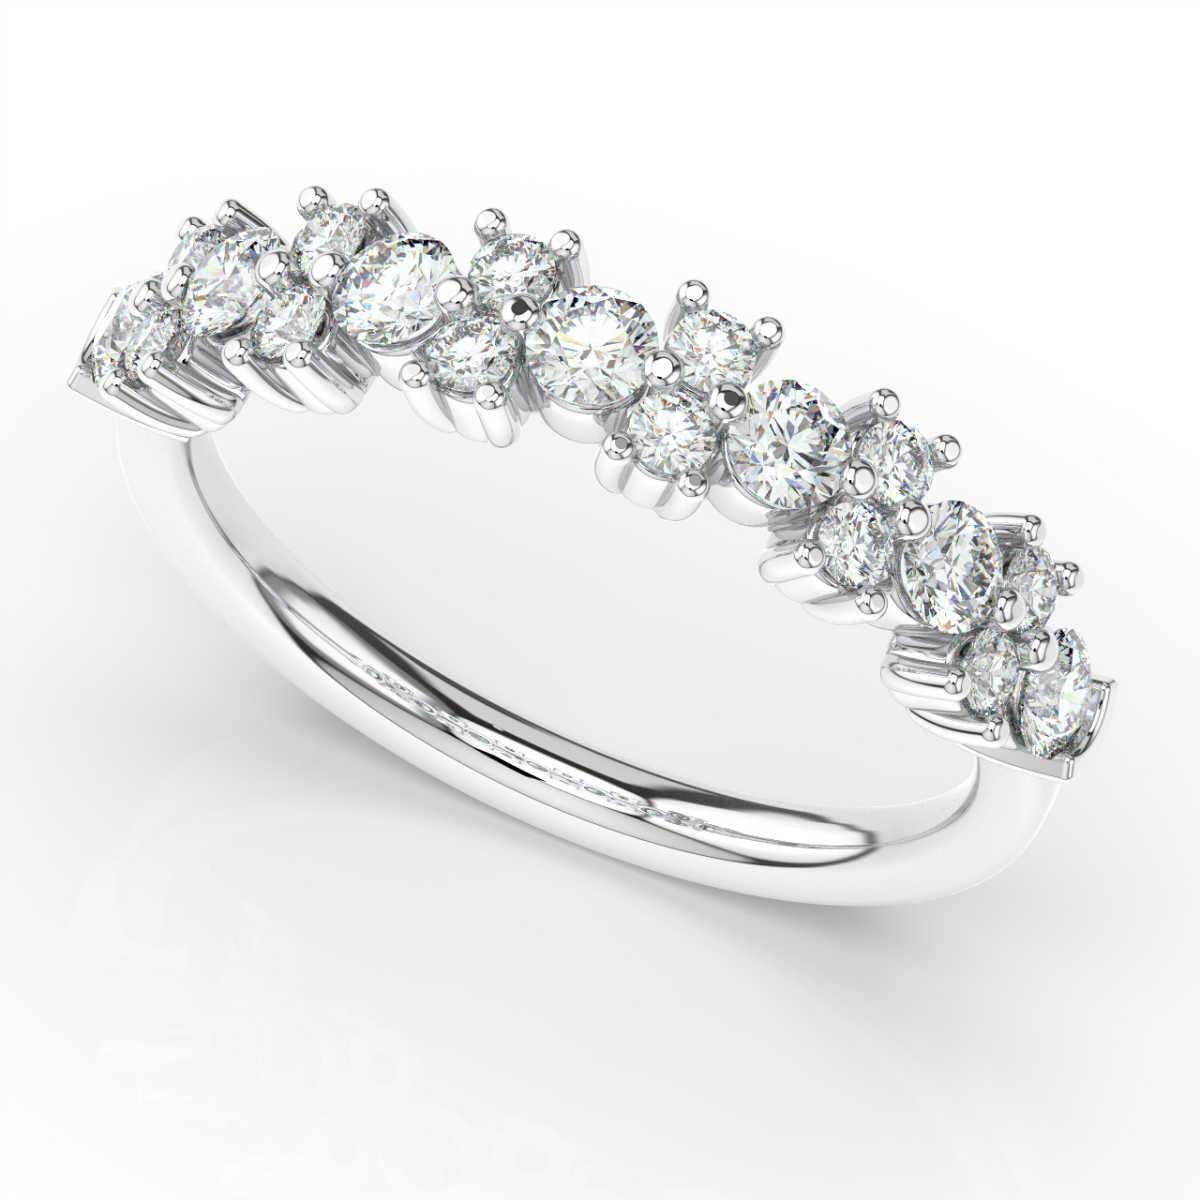 3 4 carat diamond cluster ring